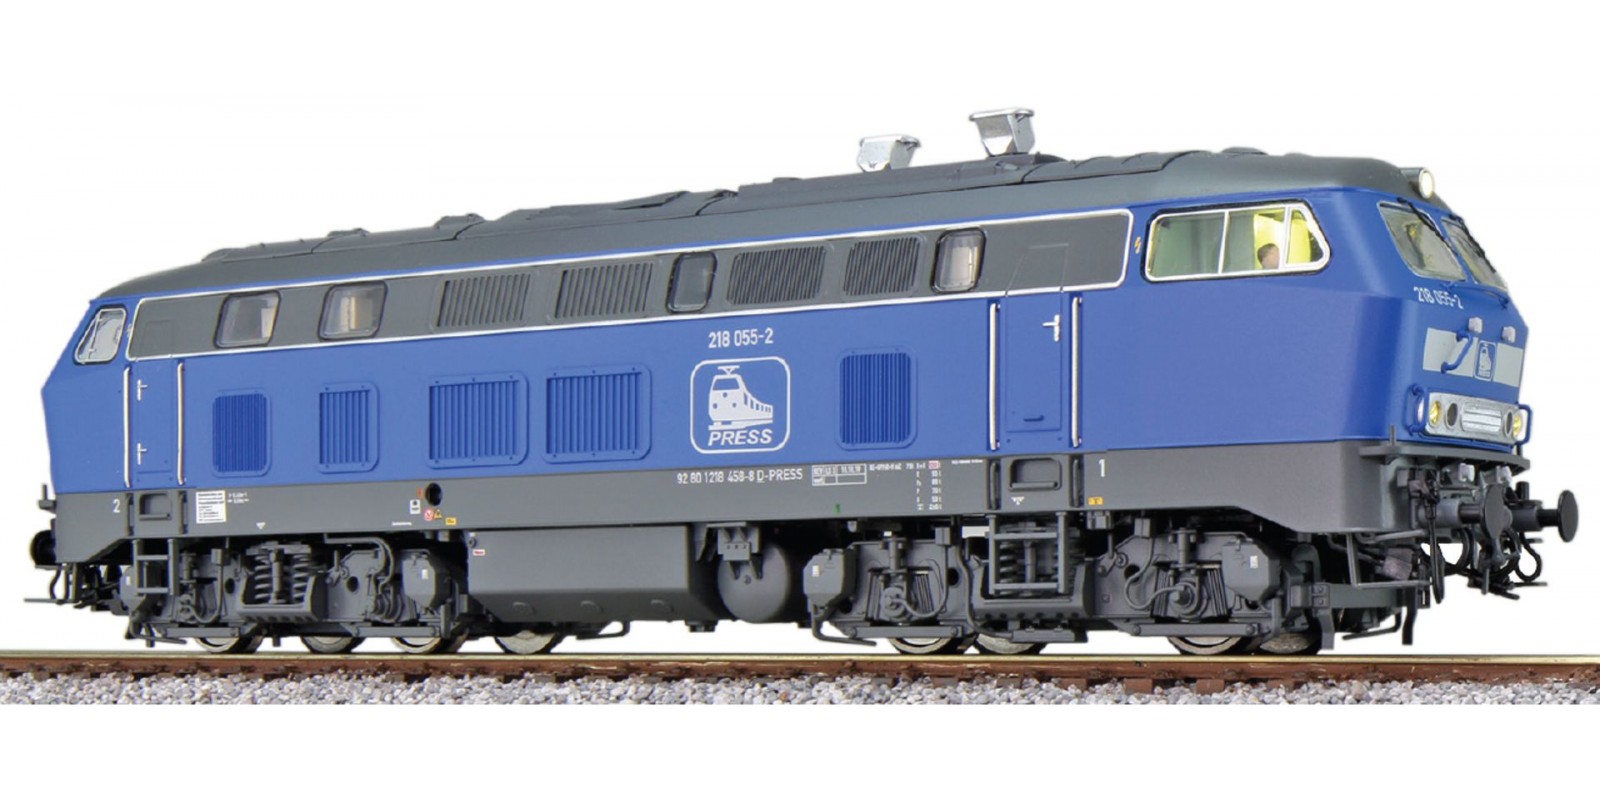 ES31009 Diesel loco, H0, BR 218, 218 055 Press, blue, Era VI, prototype around 2019, Sound+Smoke, DC/AC